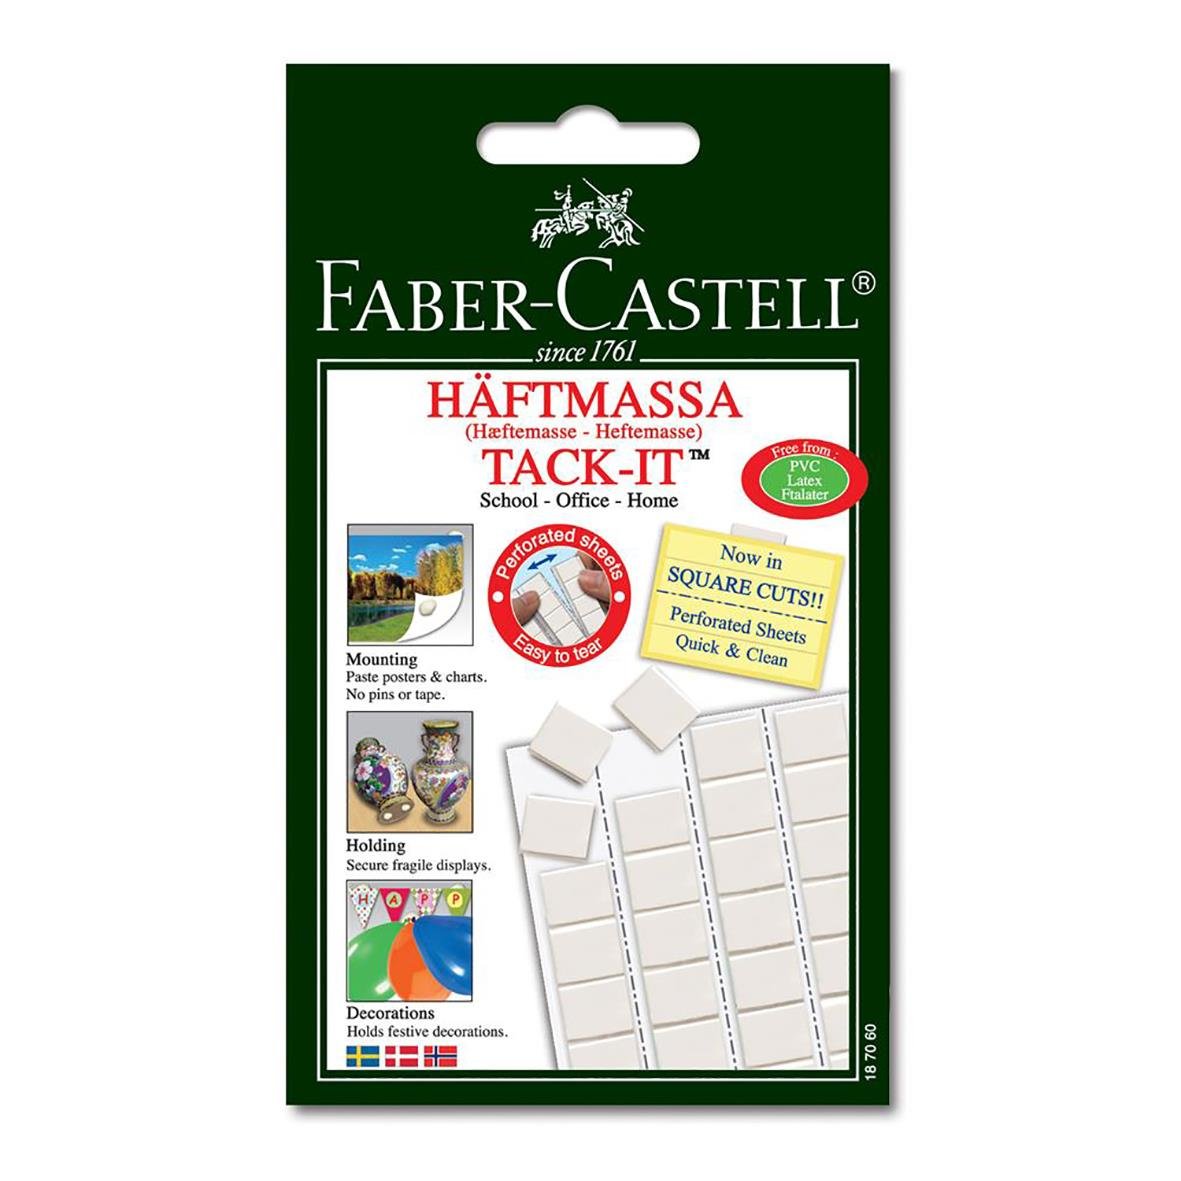 Häftmassa Faber-Castell Tack-it 50g 42030003